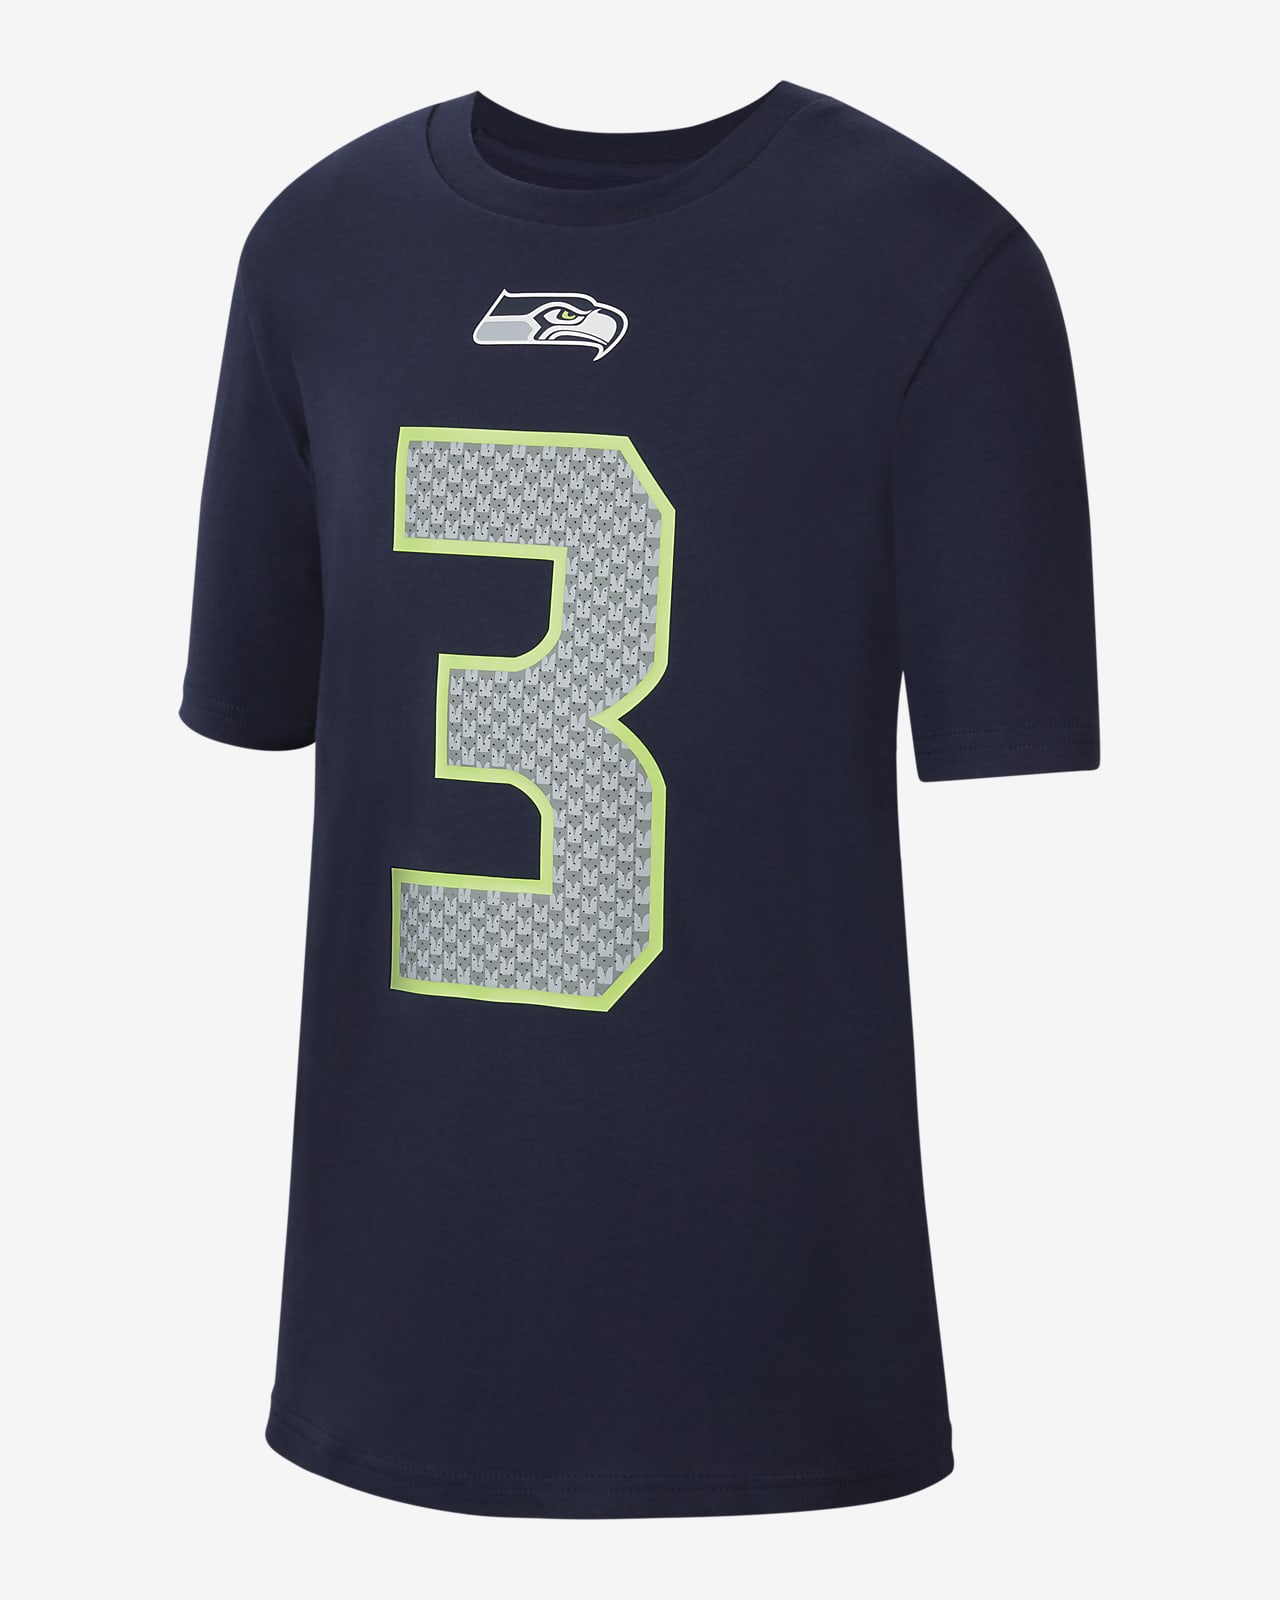 T-shirt Nike (NFL Seattle Seahawks) Júnior